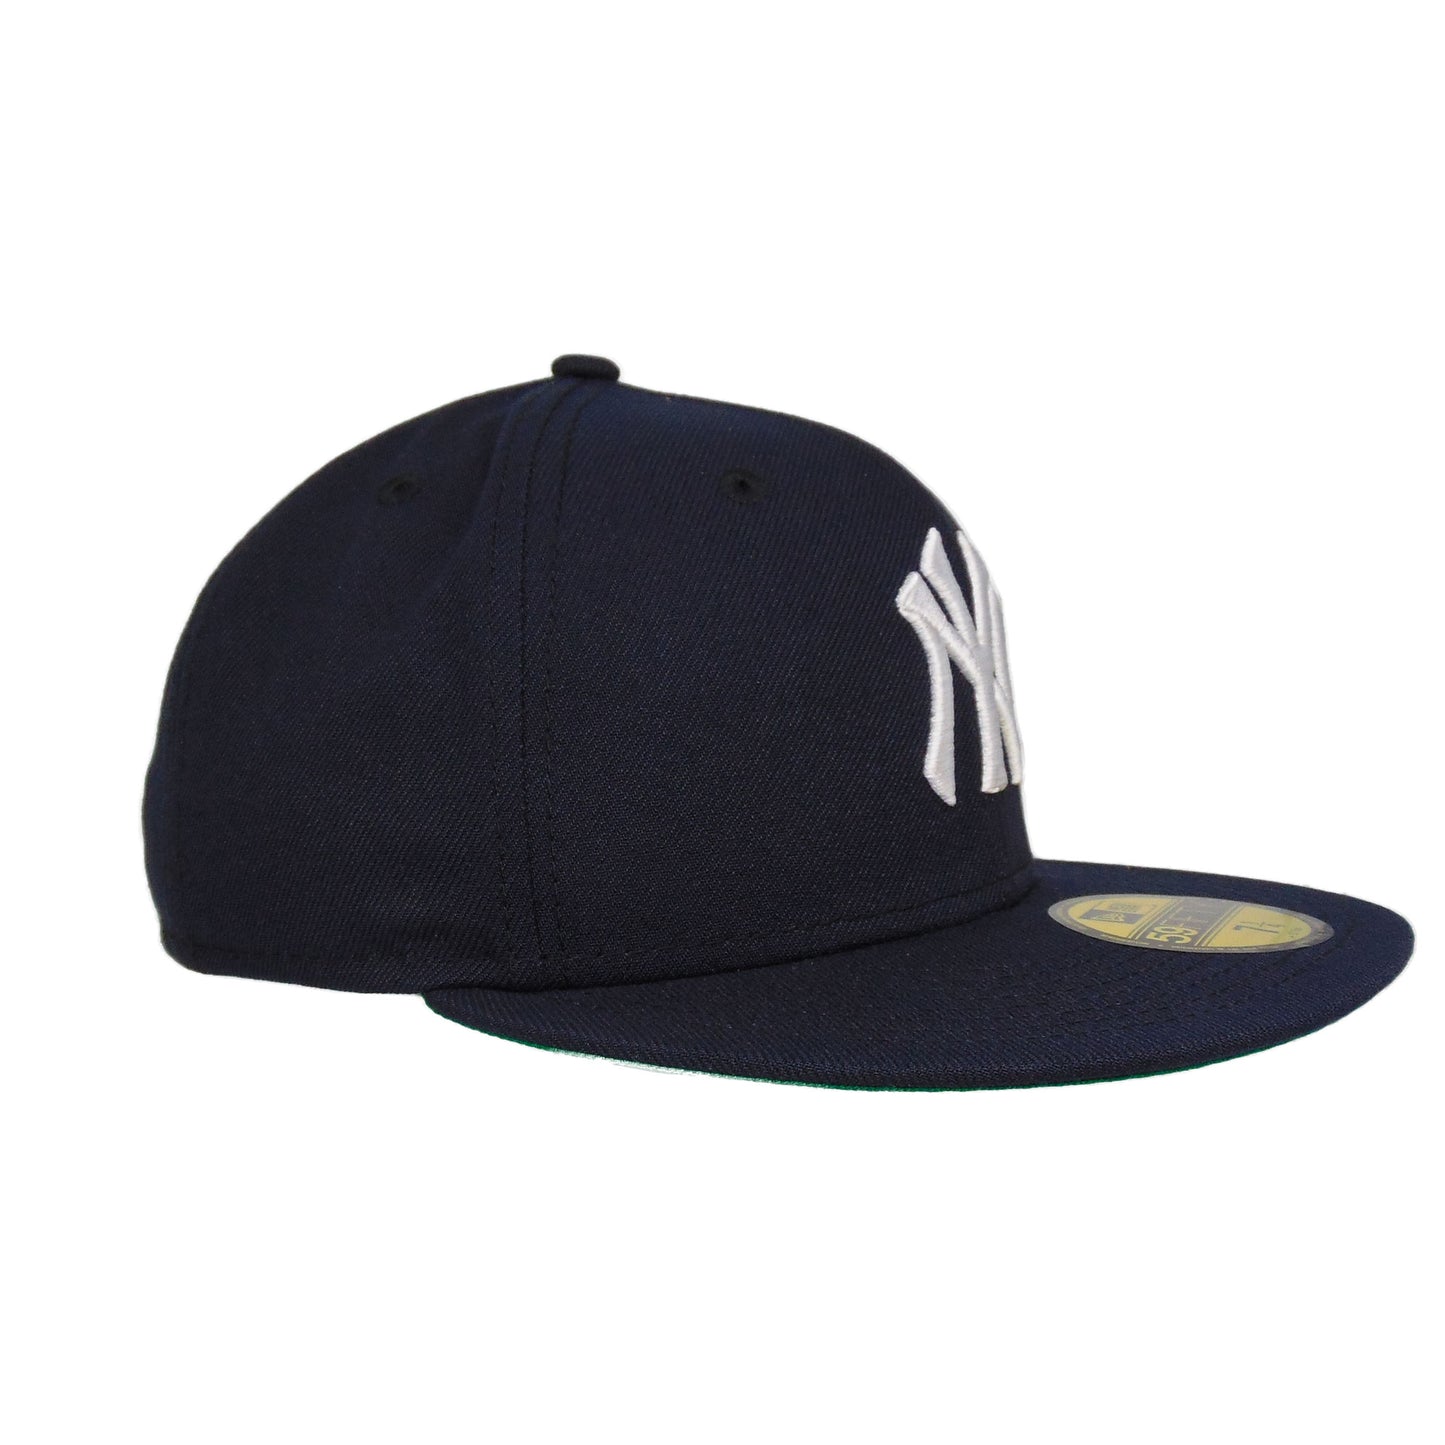 New York Yankees Custom New Era 59FIFTY Cap Navy WS1961